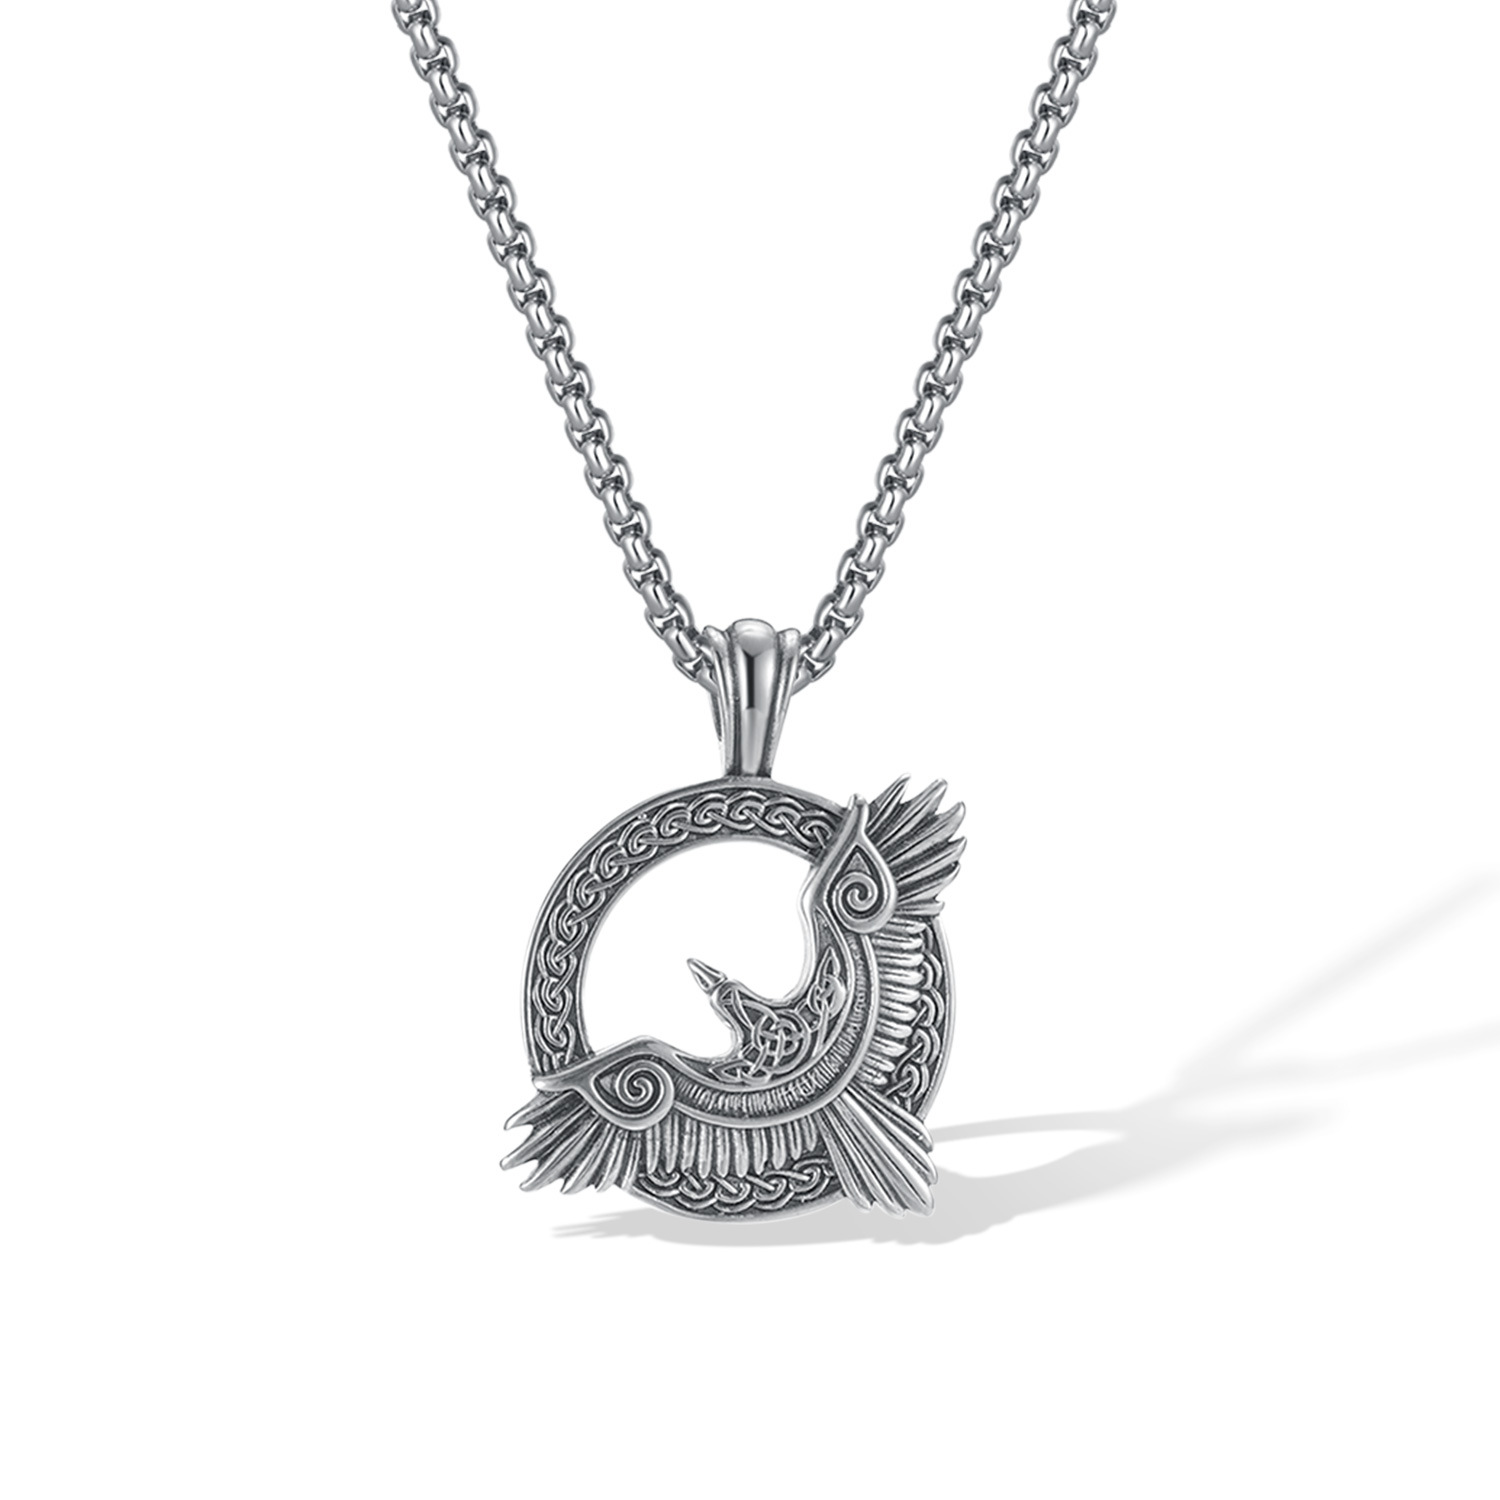 2:Steel pendant with chain 3x55cm